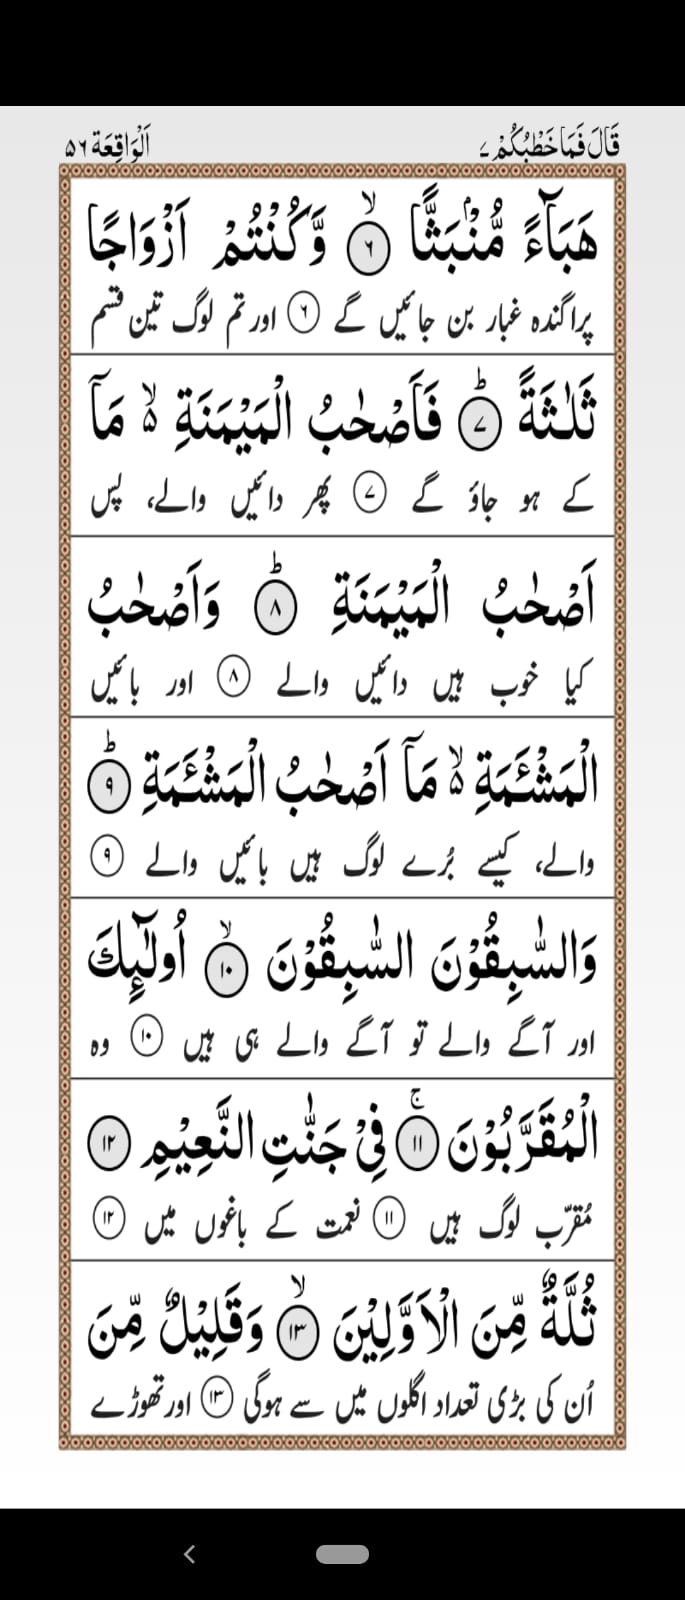 Surah Waqiah with Urdu Translation Page 2